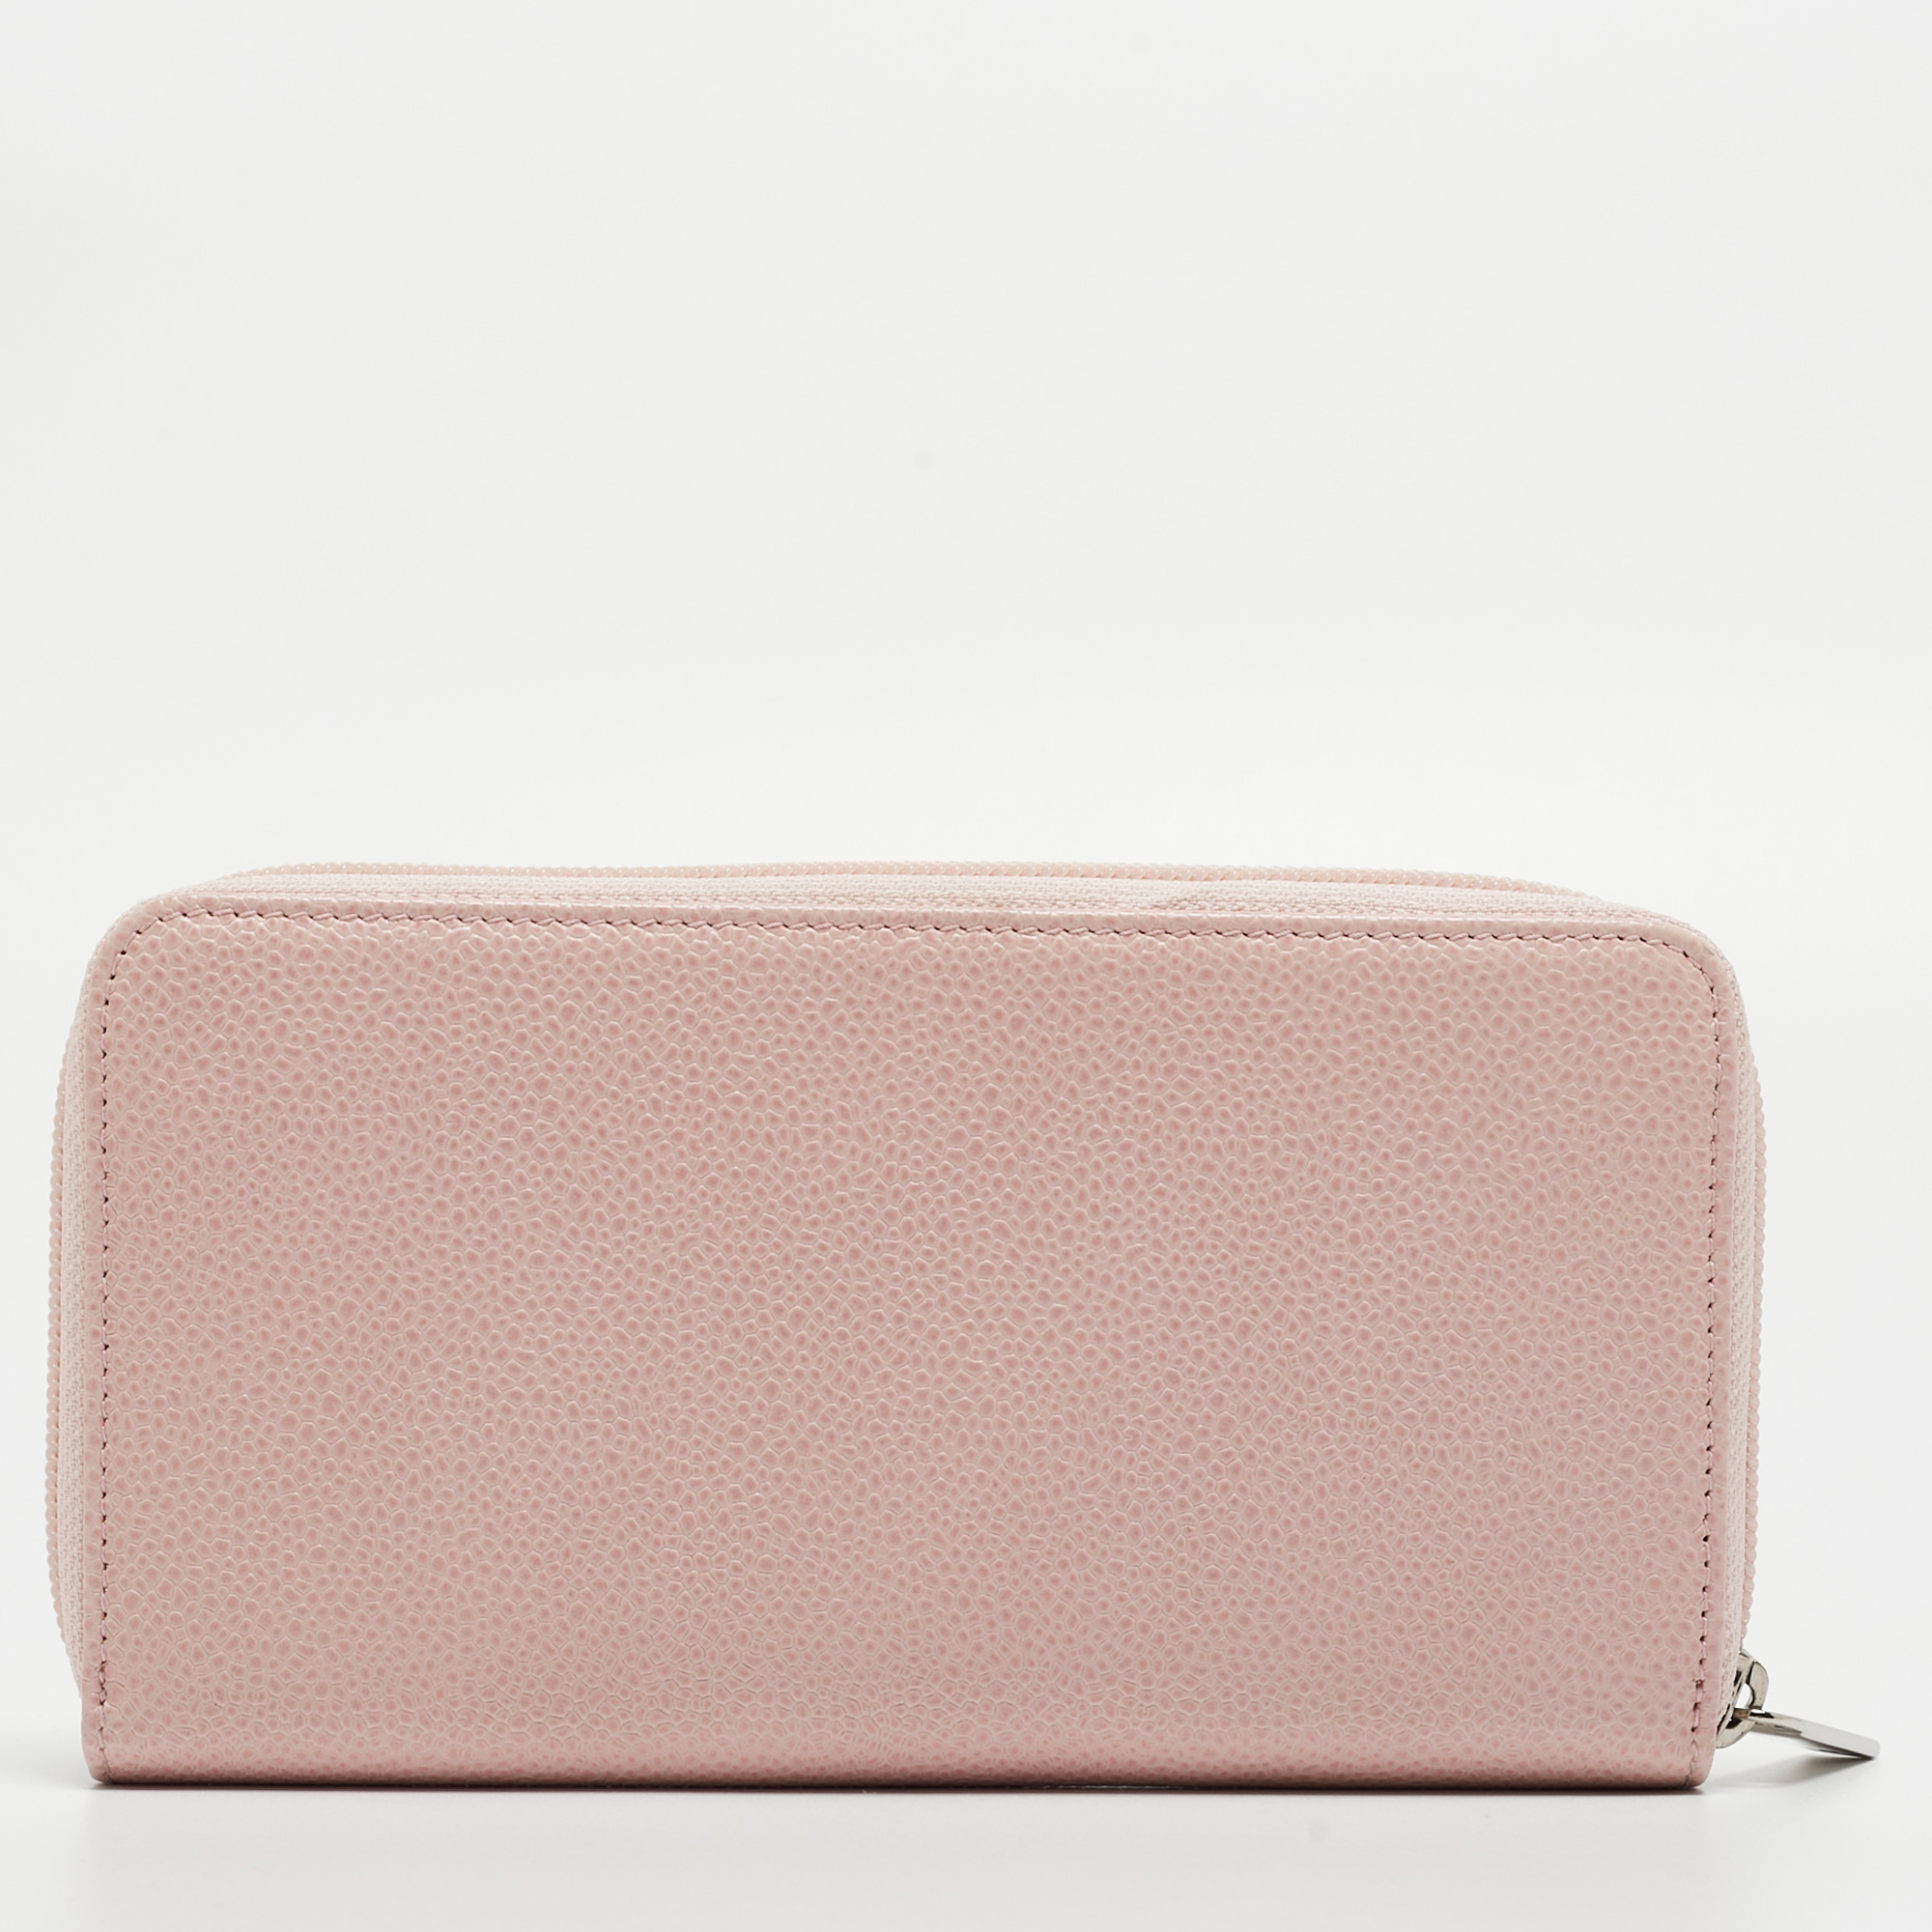 Chanel Pink Caviar Leather CC Zip Around Wallet